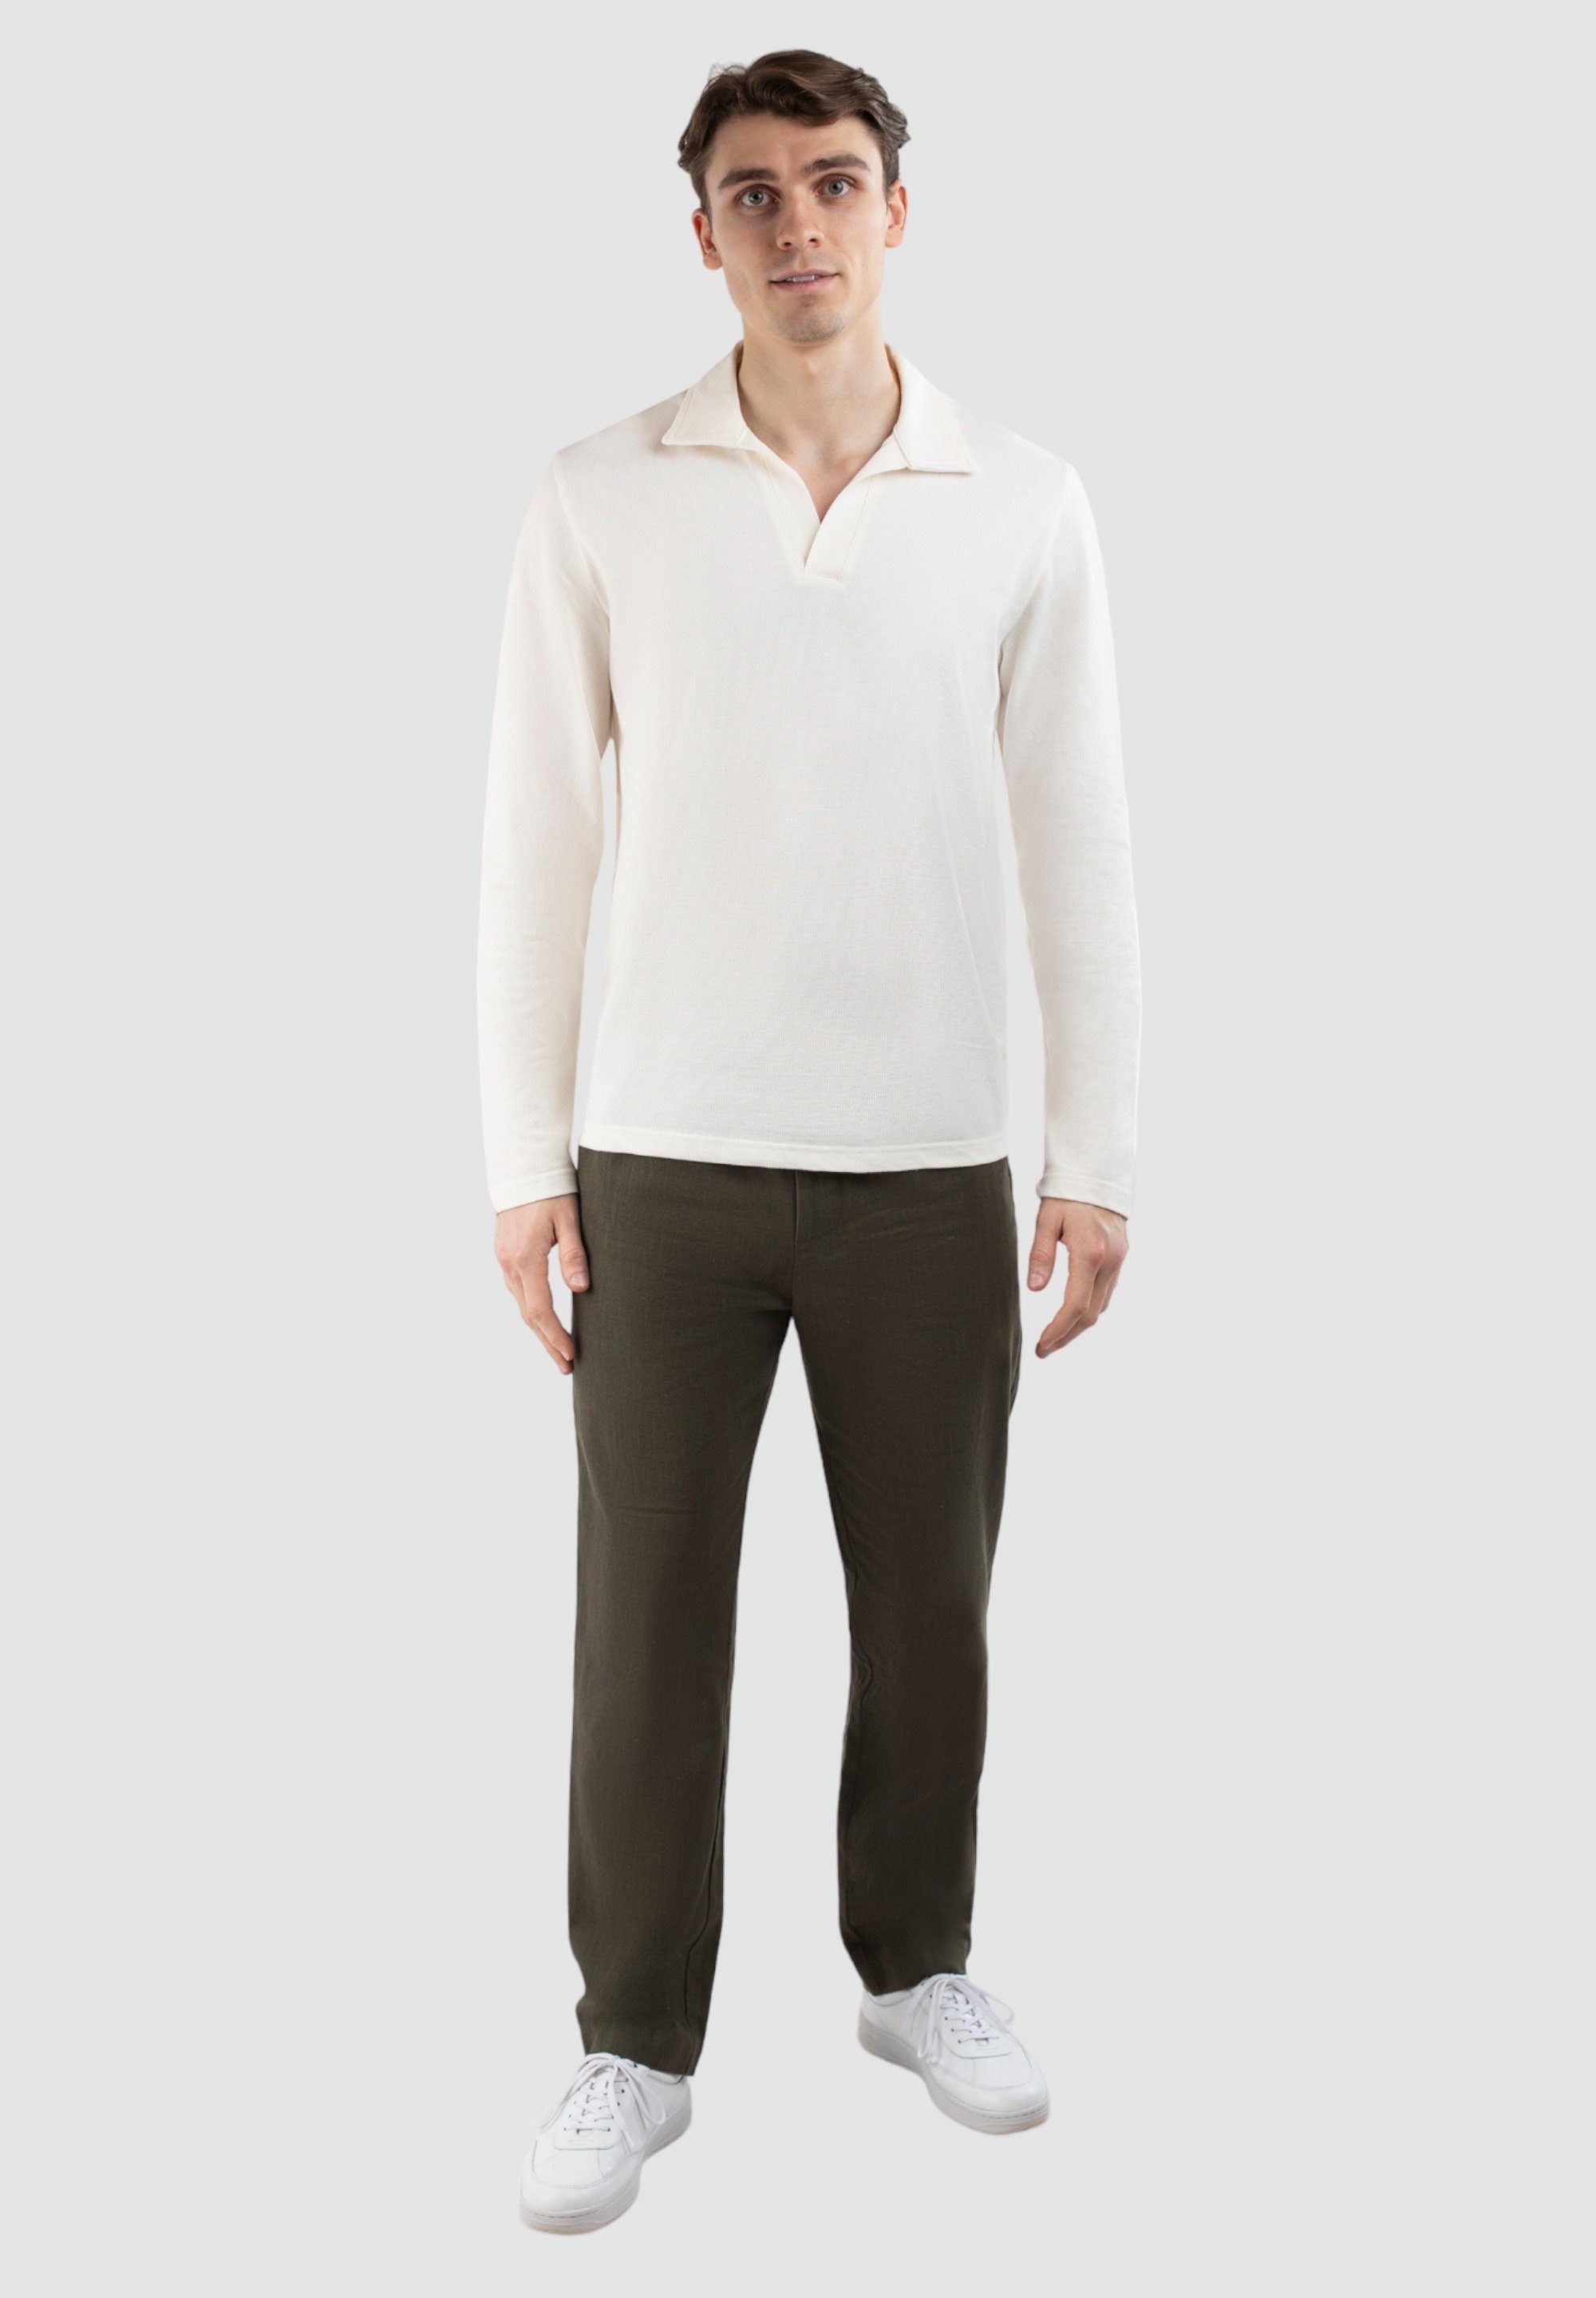 Ciszere Poloshirt collar. Nelson Polo shirt open off-white with